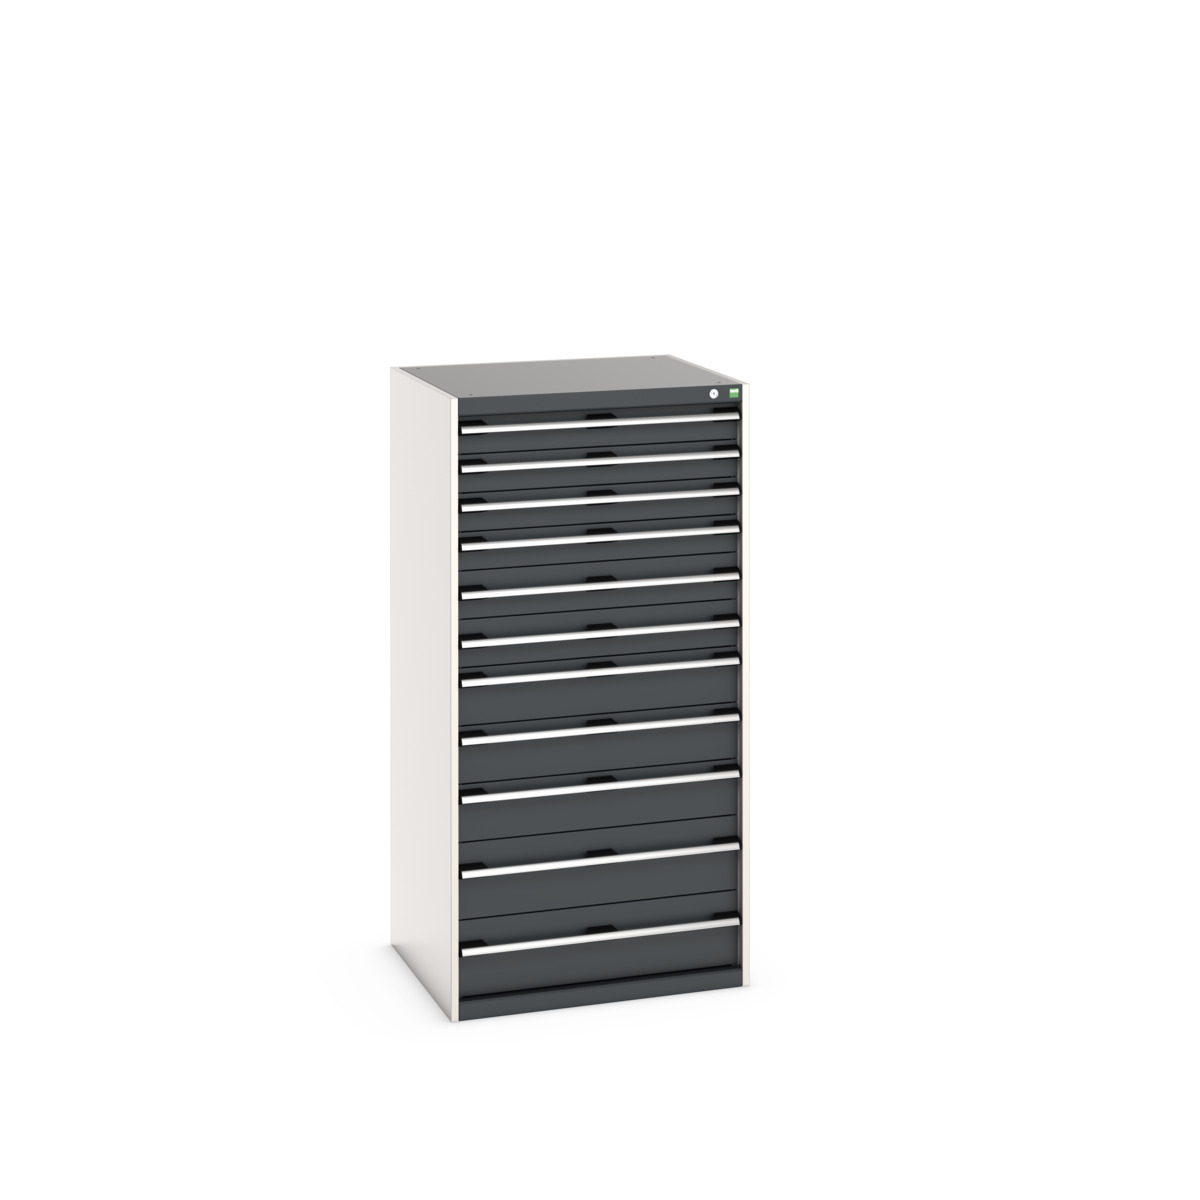 40028042. - cubio drawer cabinet 